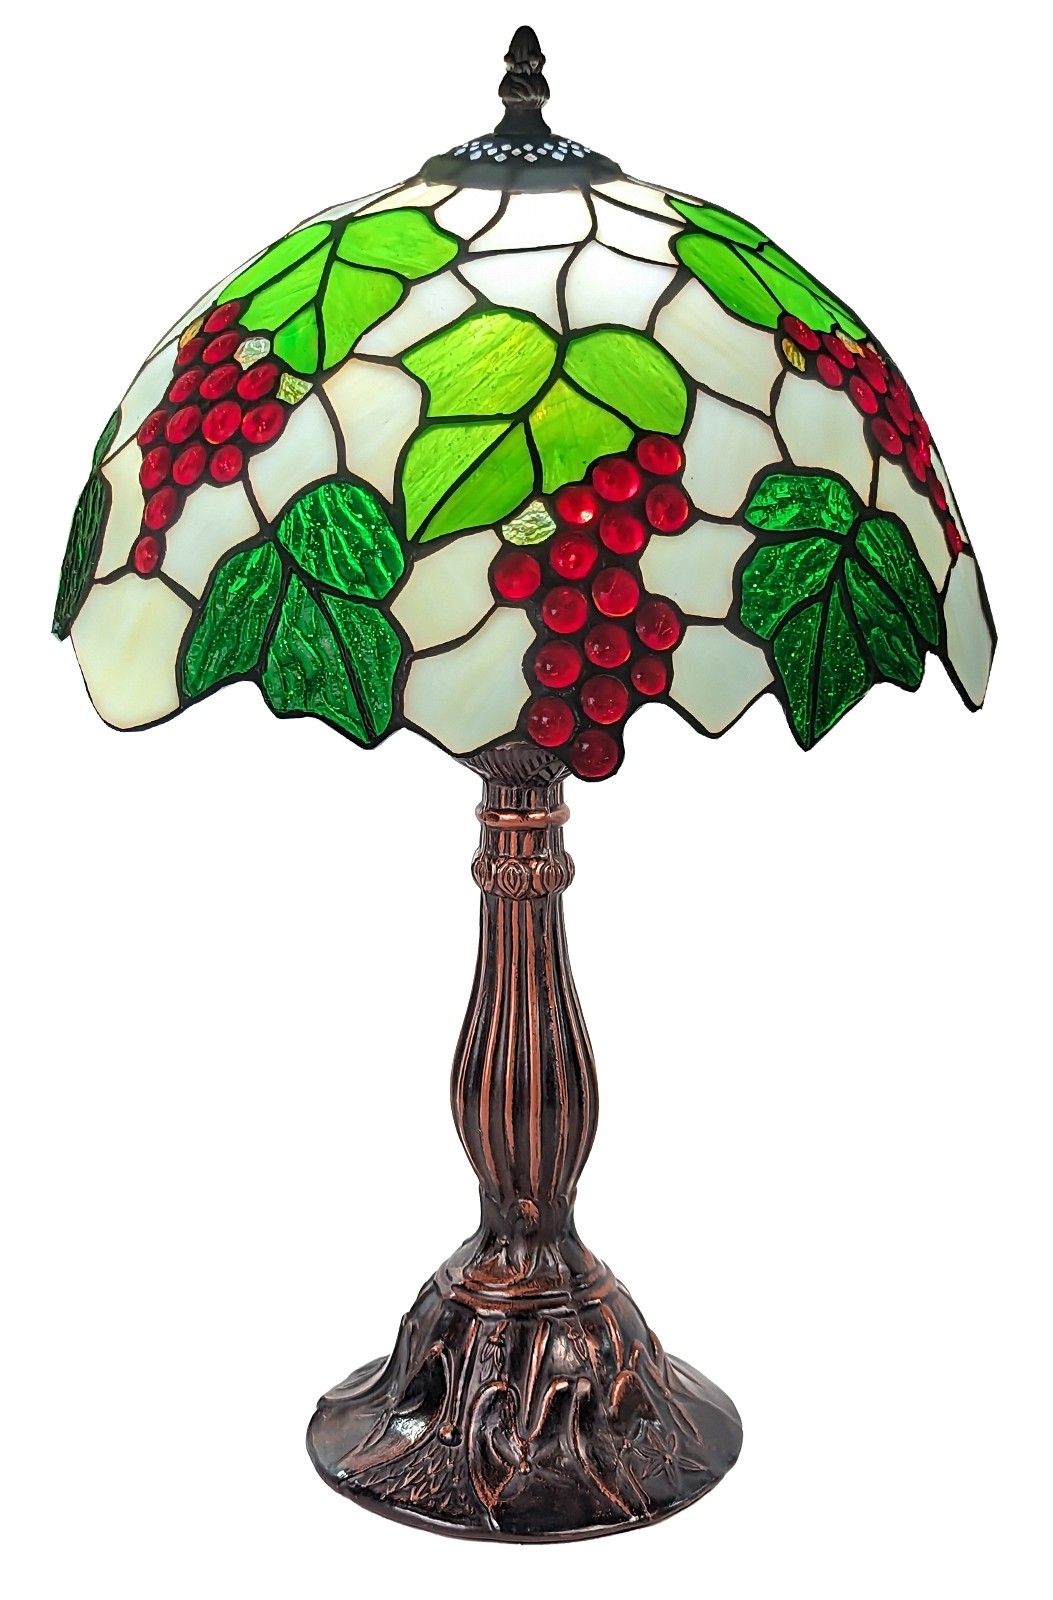 Grape Tiffany Table Lamp (Medium) 46cm + Free Incandescent Bulb